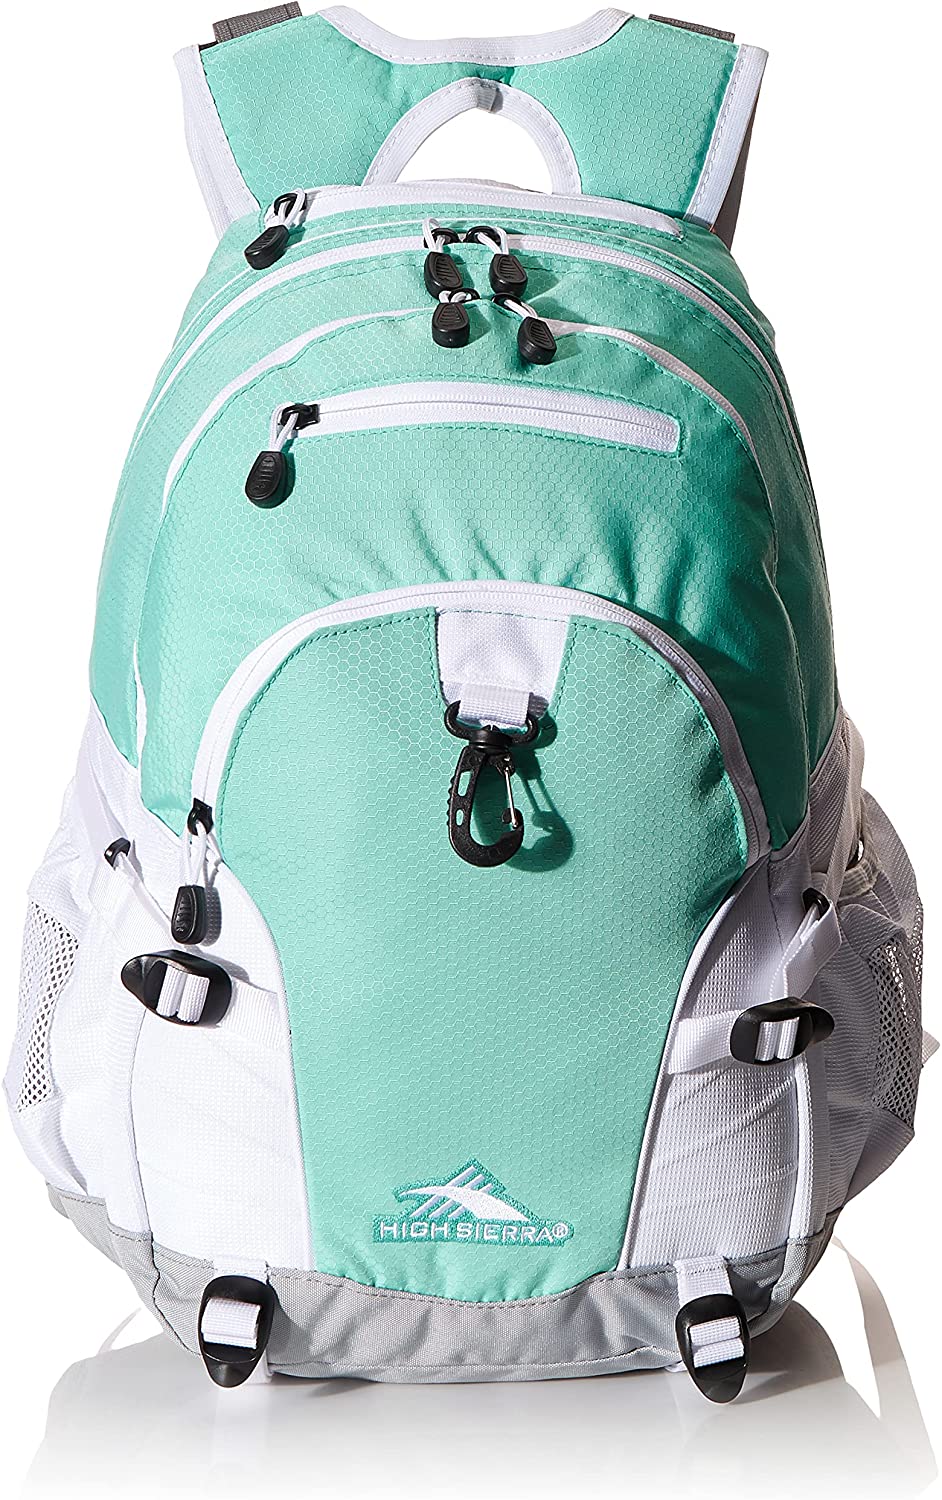 High Sierra Loop-Backpack, School, Travel, or Work Bookbag with tablet-sleeve, Aquamarine/White/Ash, One Size - image 1 of 6